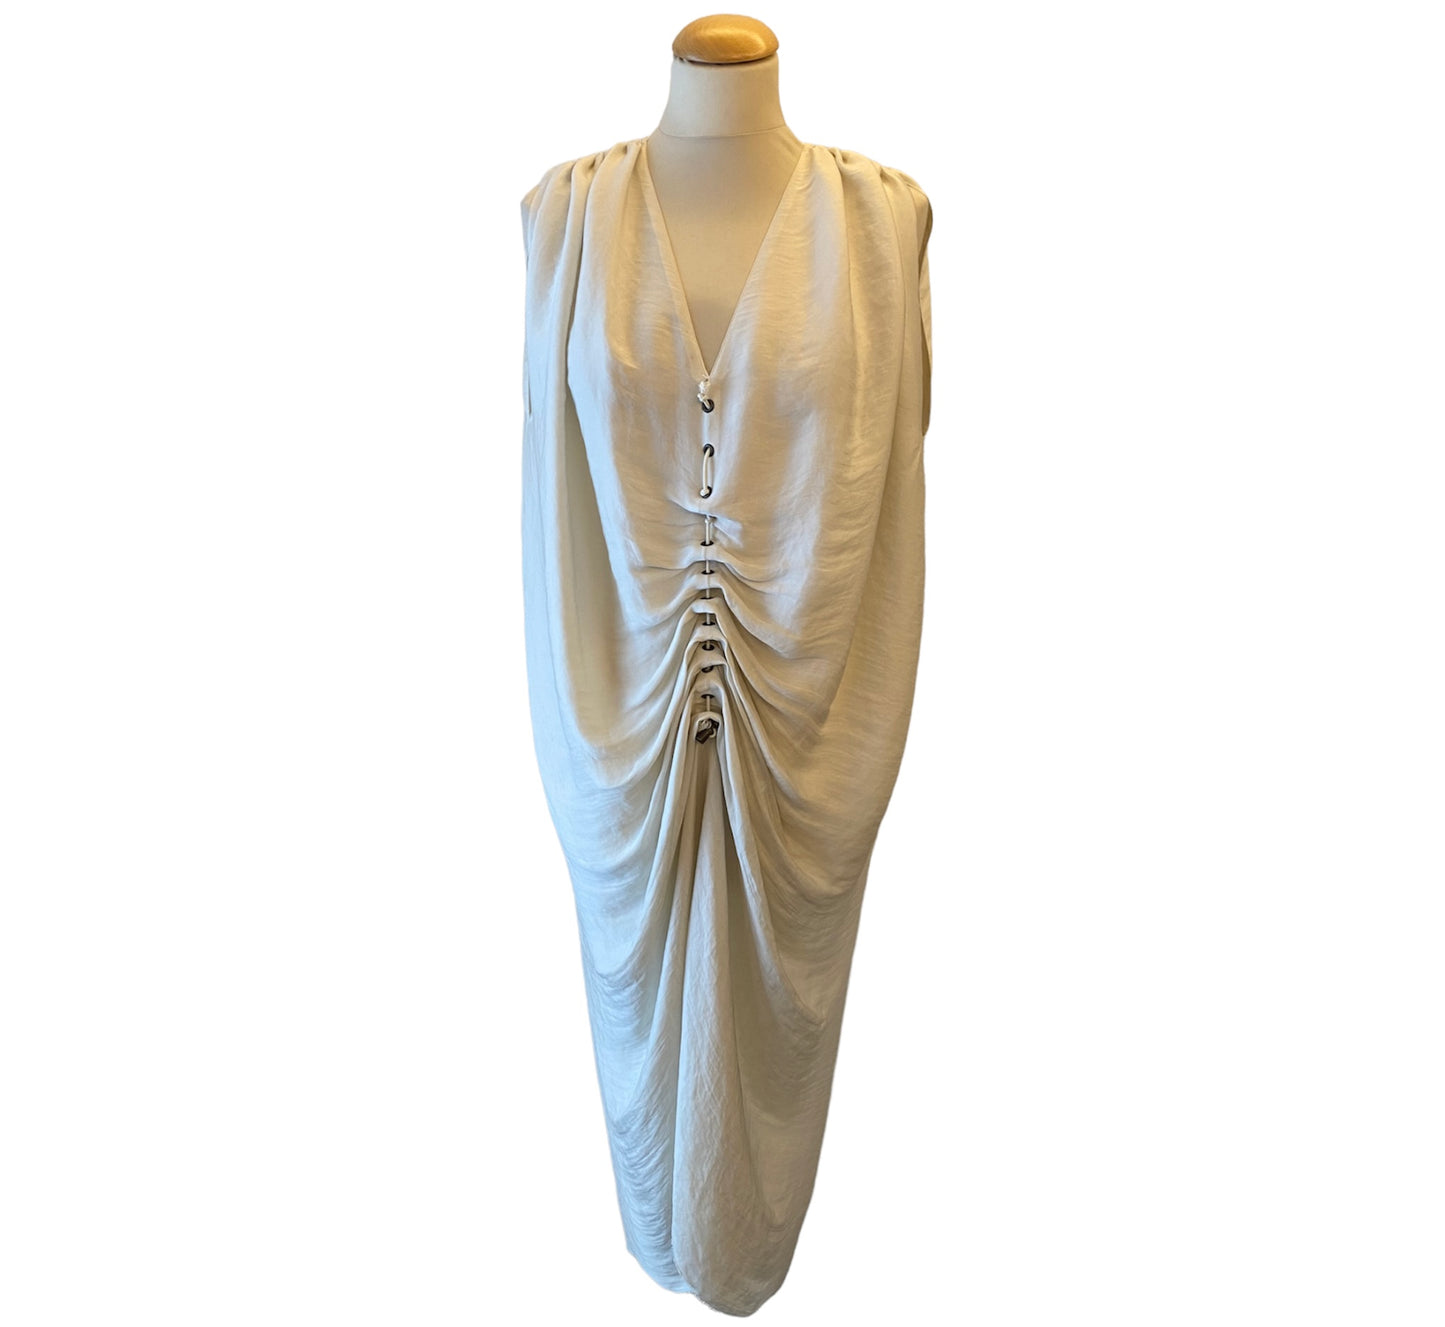 LANVIN Silk Dress Size 36/38